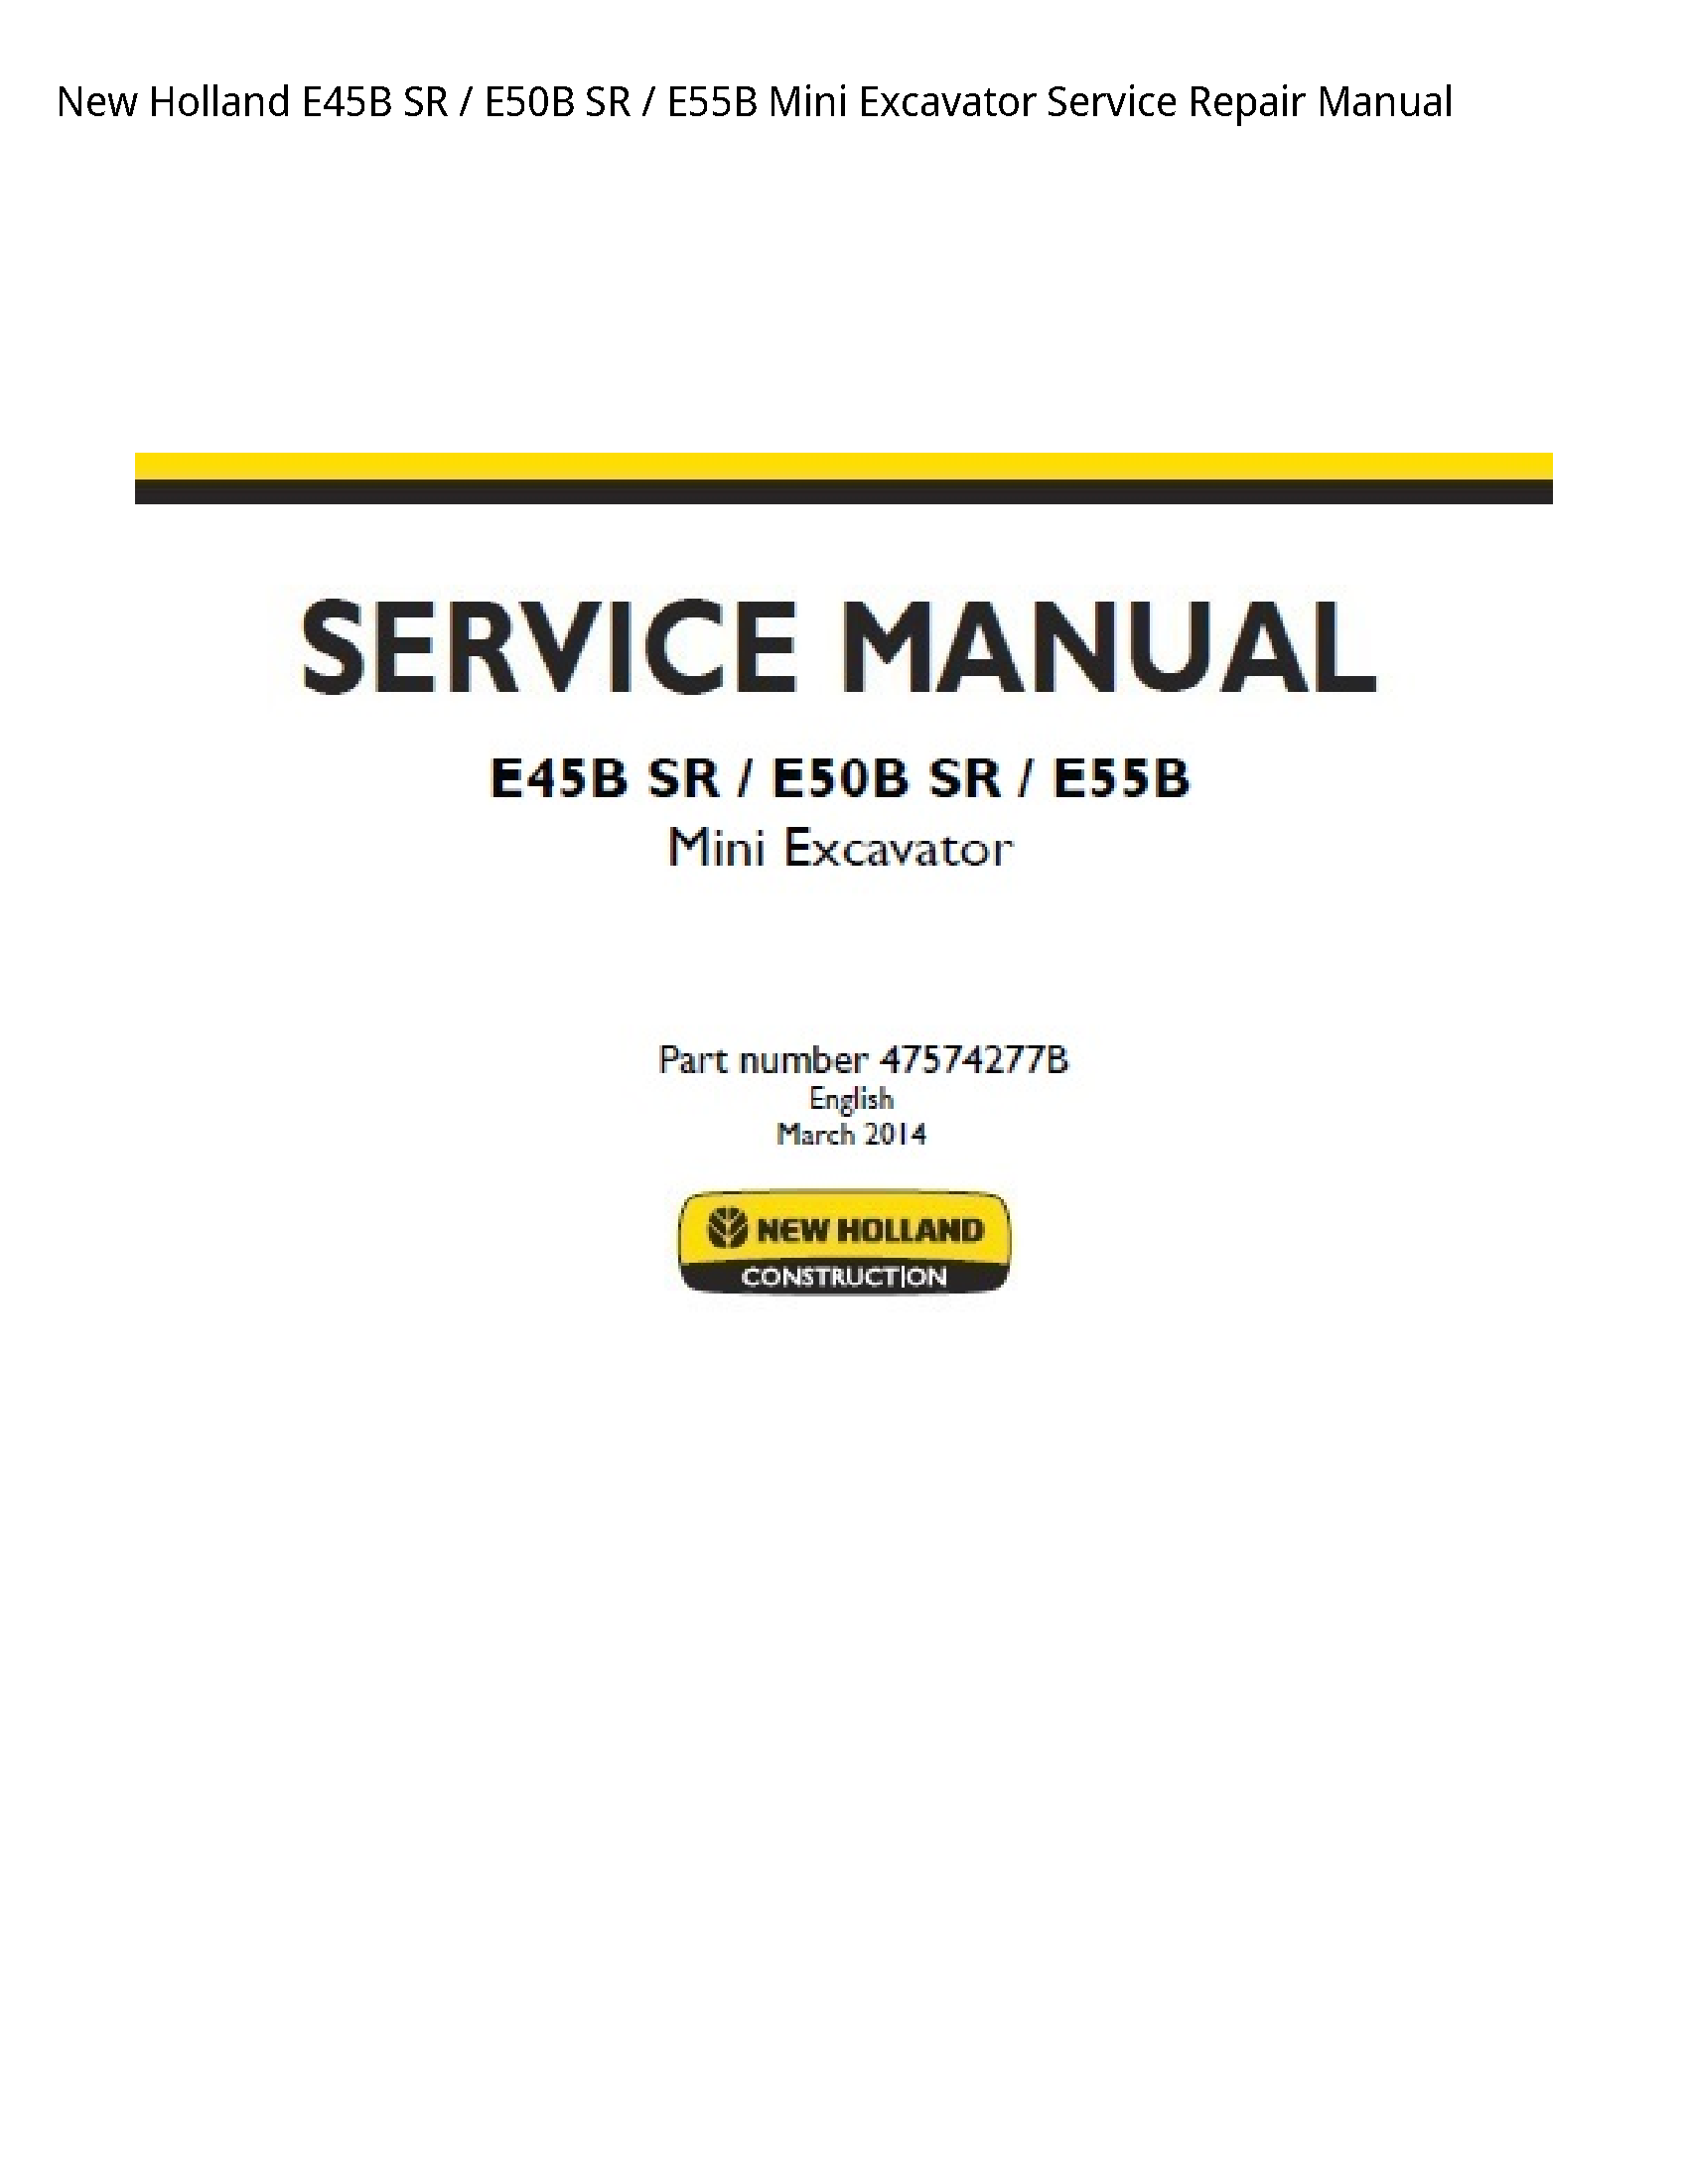 New Holland E45B SR SR Mini Excavator manual